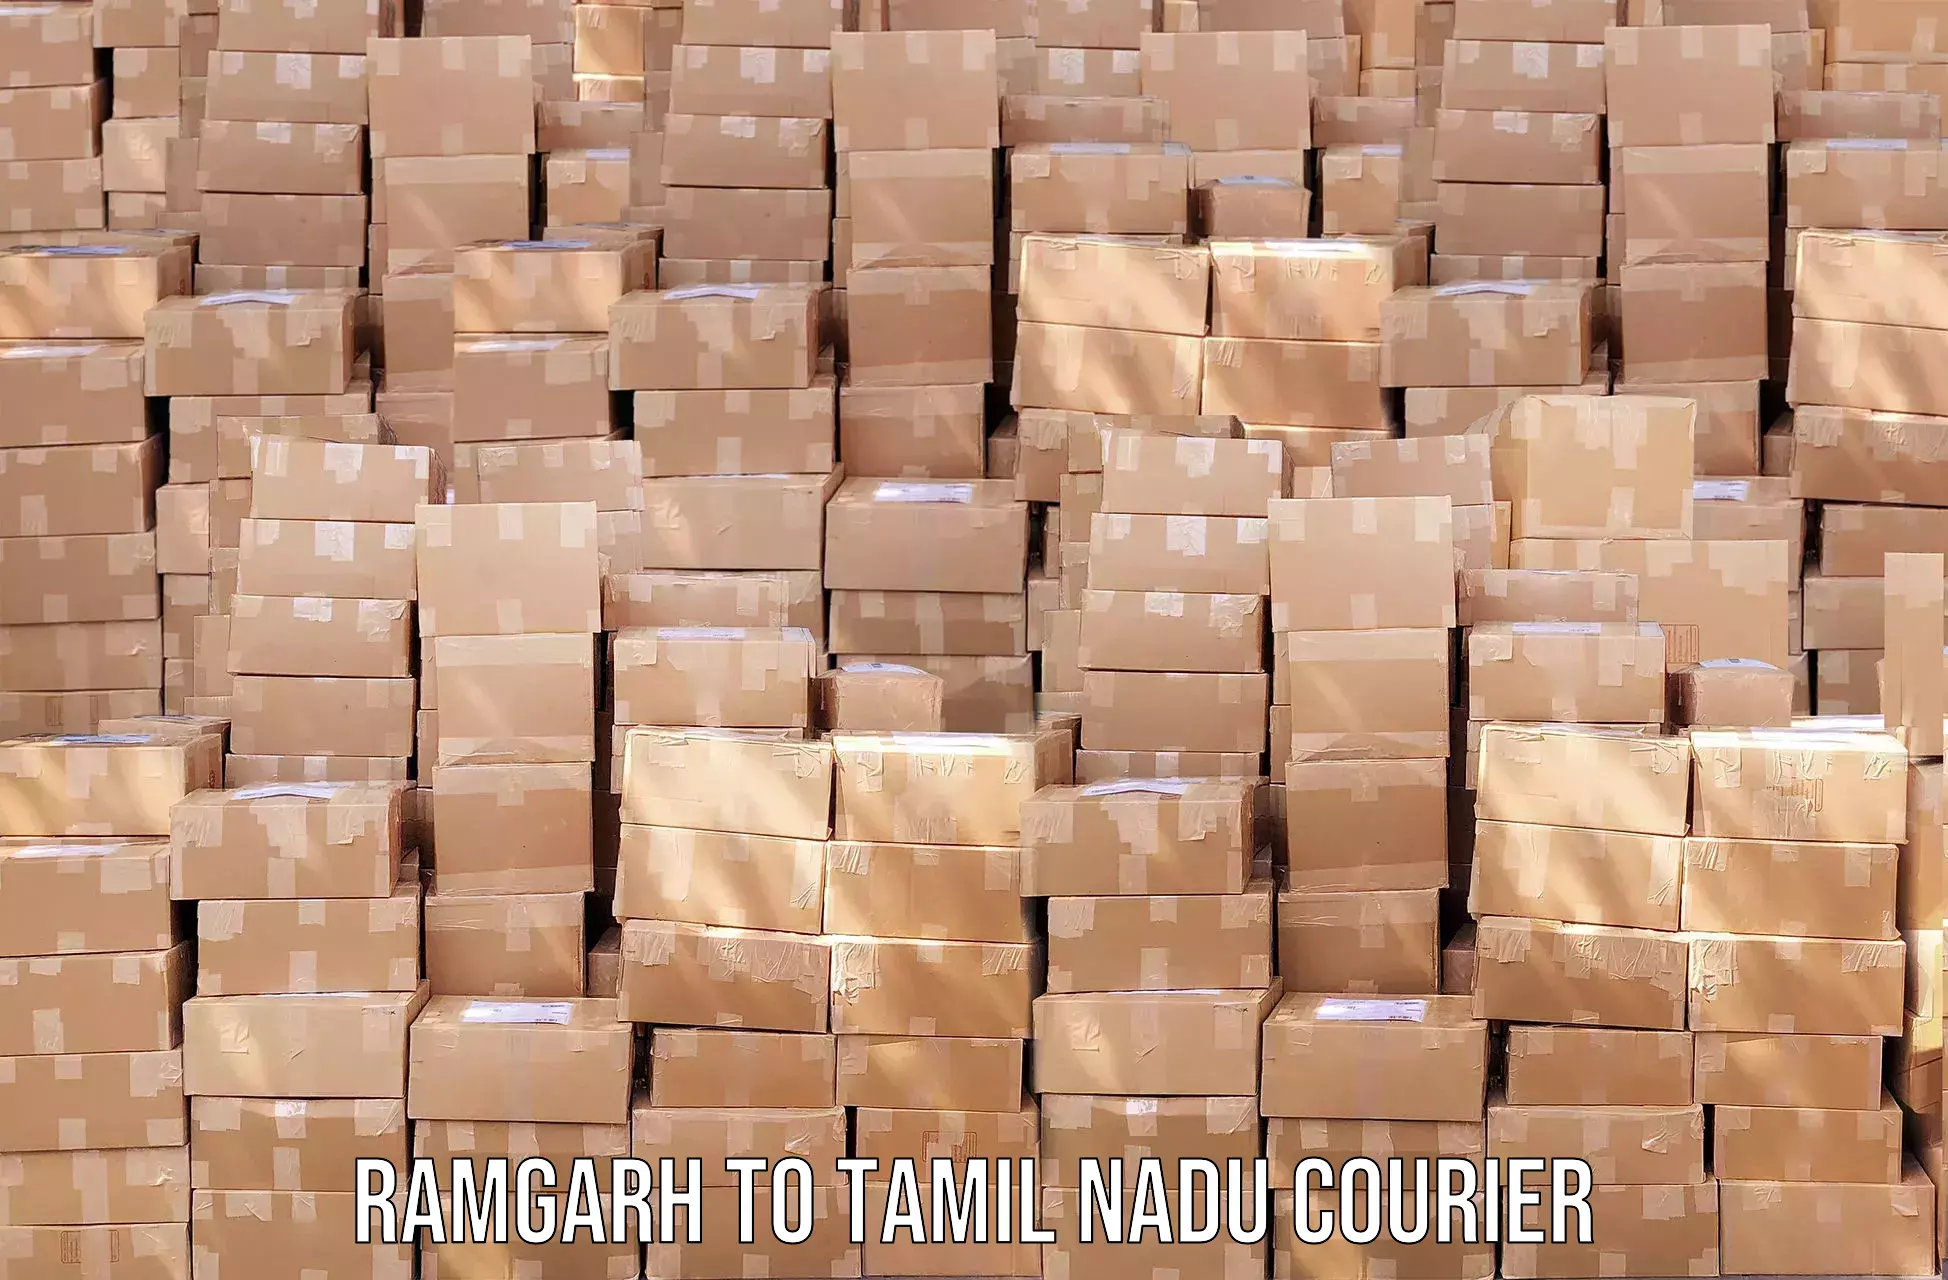 Efficient order fulfillment Ramgarh to Vandavasi